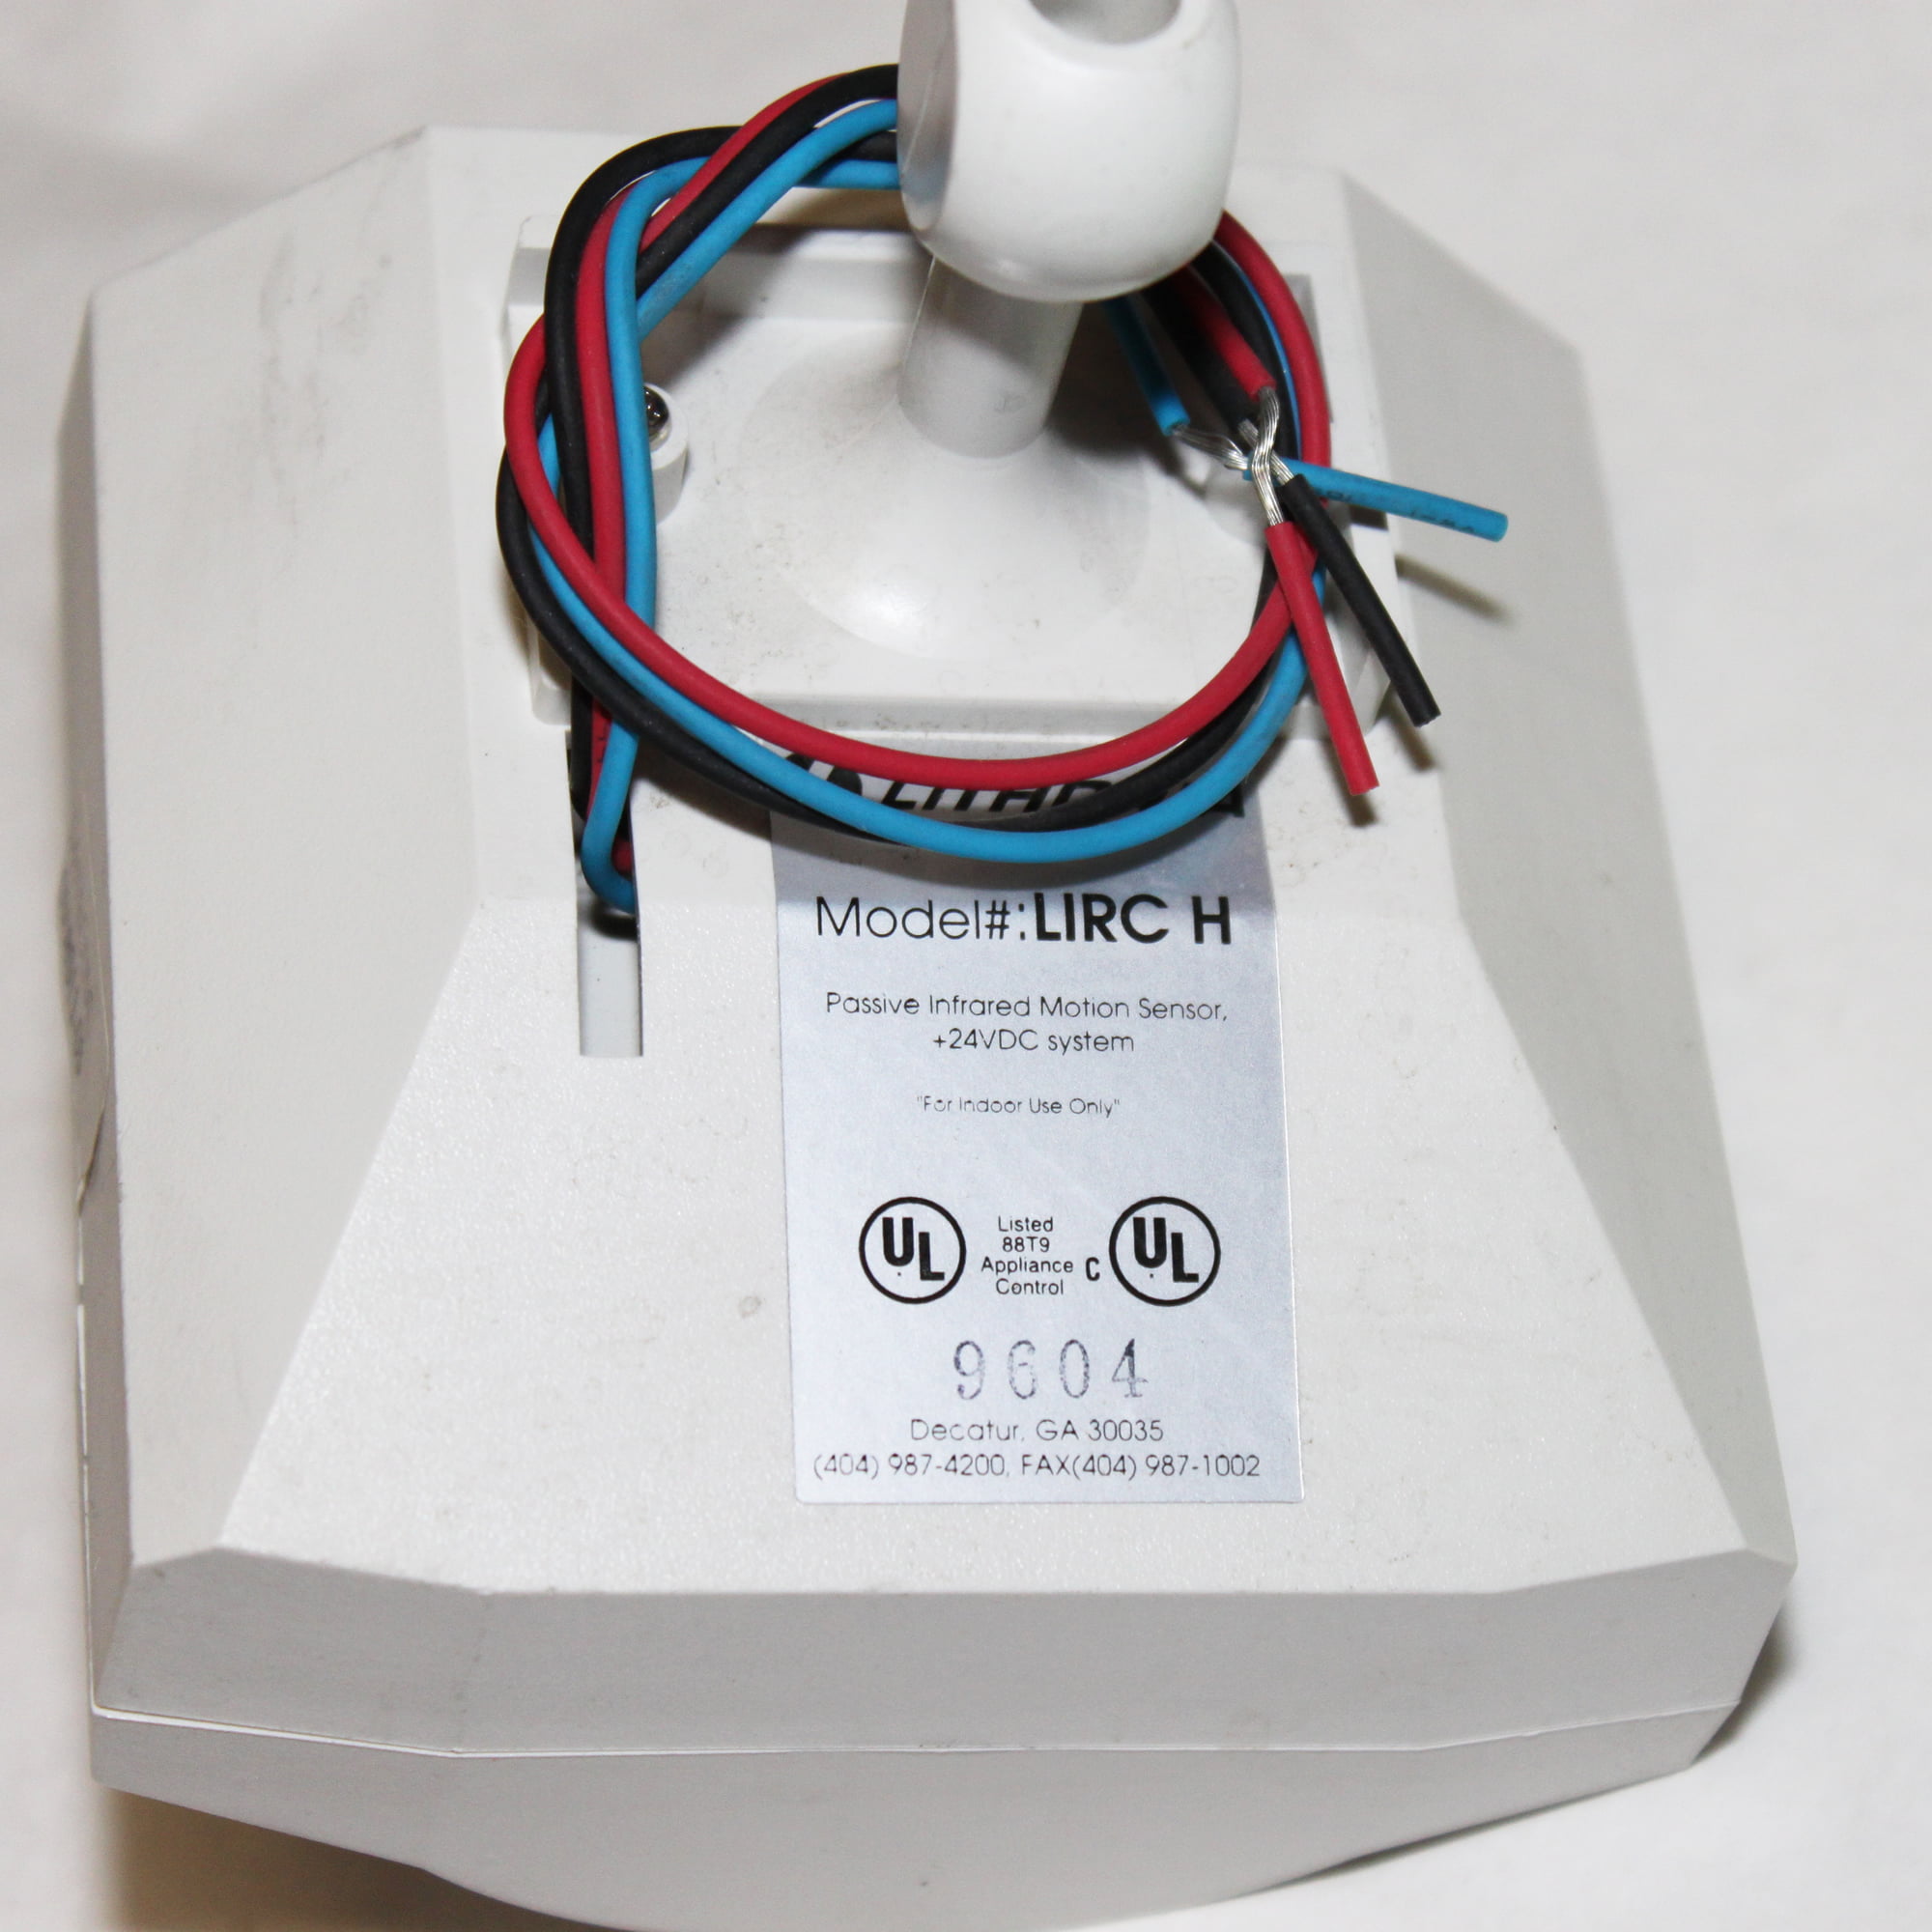 New Lithonia Lighting LIRC H Occupancy Sensor 